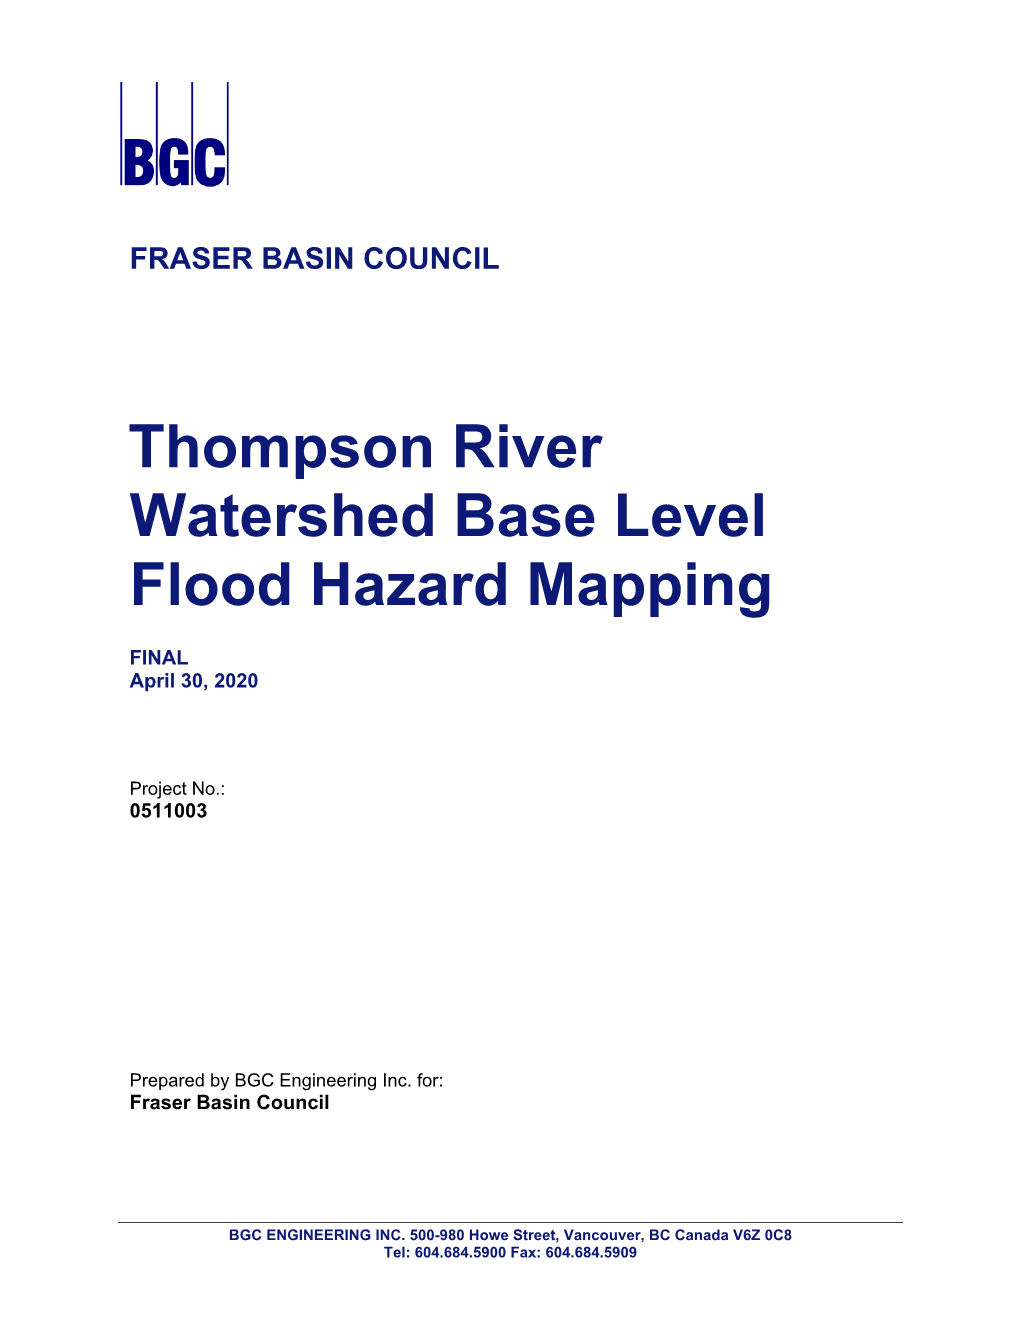 Thompson River Watershed Base Level Flood Hazard Mapping